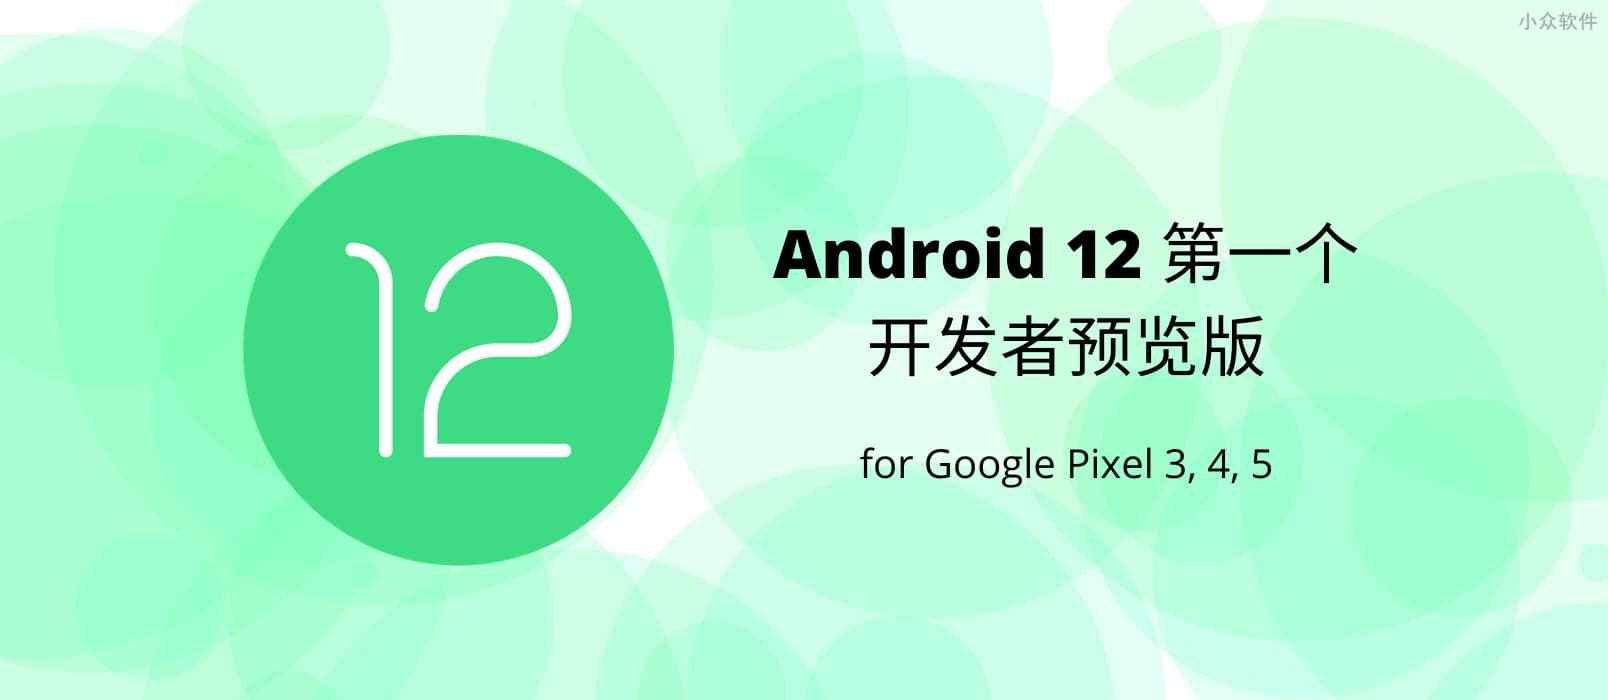 Android 12 第一个开发者预览版已经可以下载了，支持 Pixel 3 以上设备 1